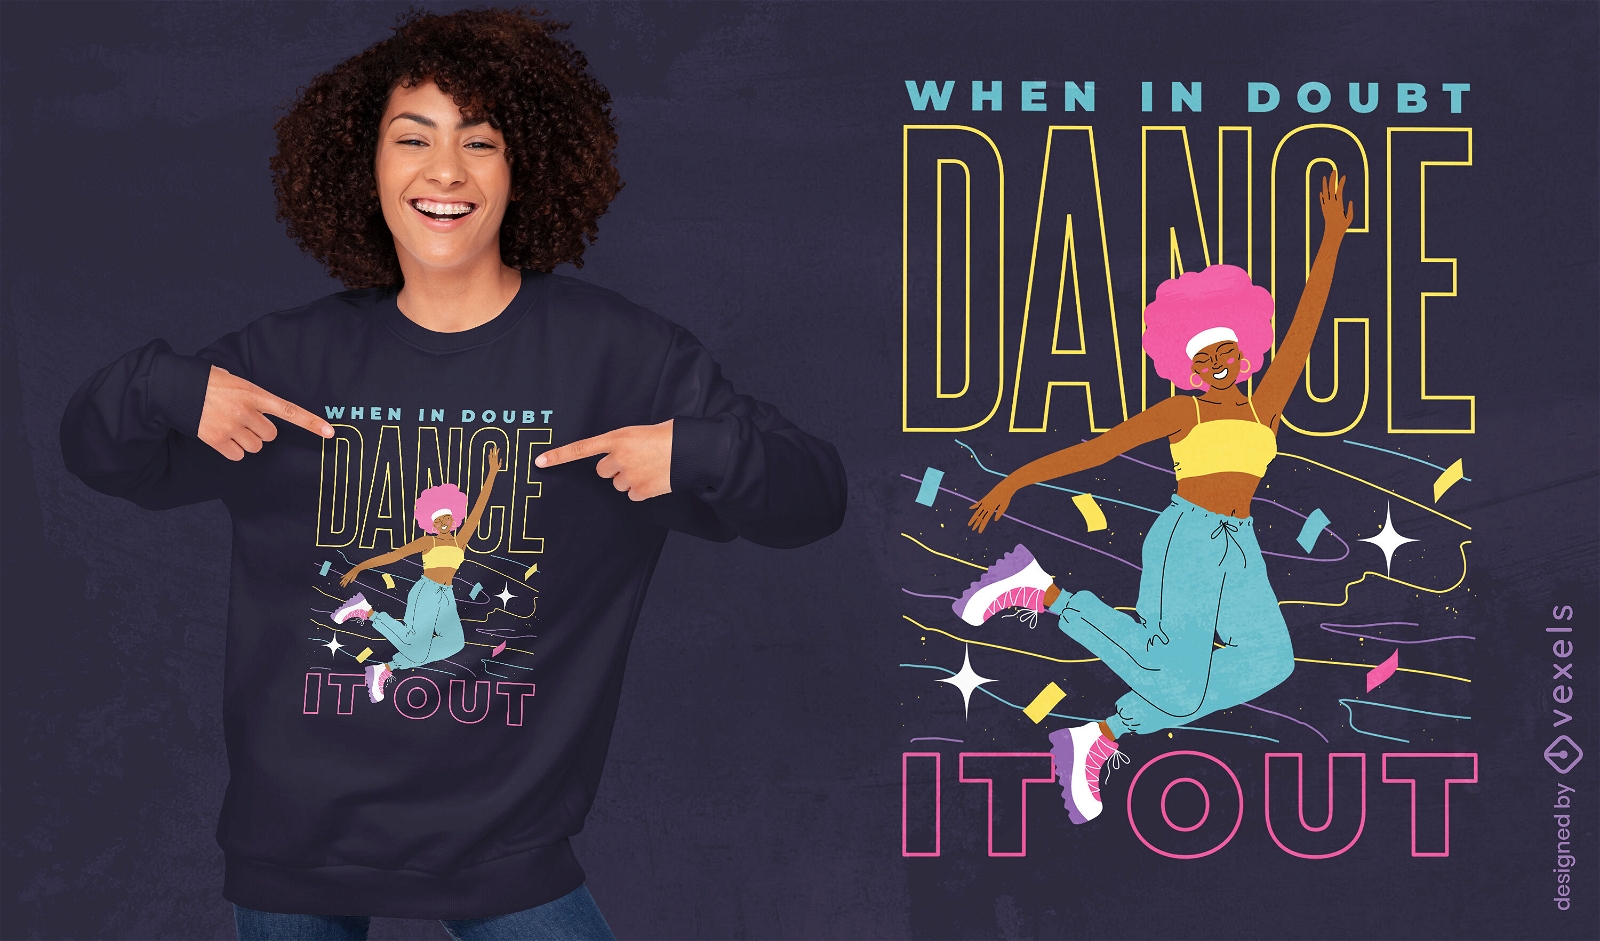 Dancer dance it out t-shirt design